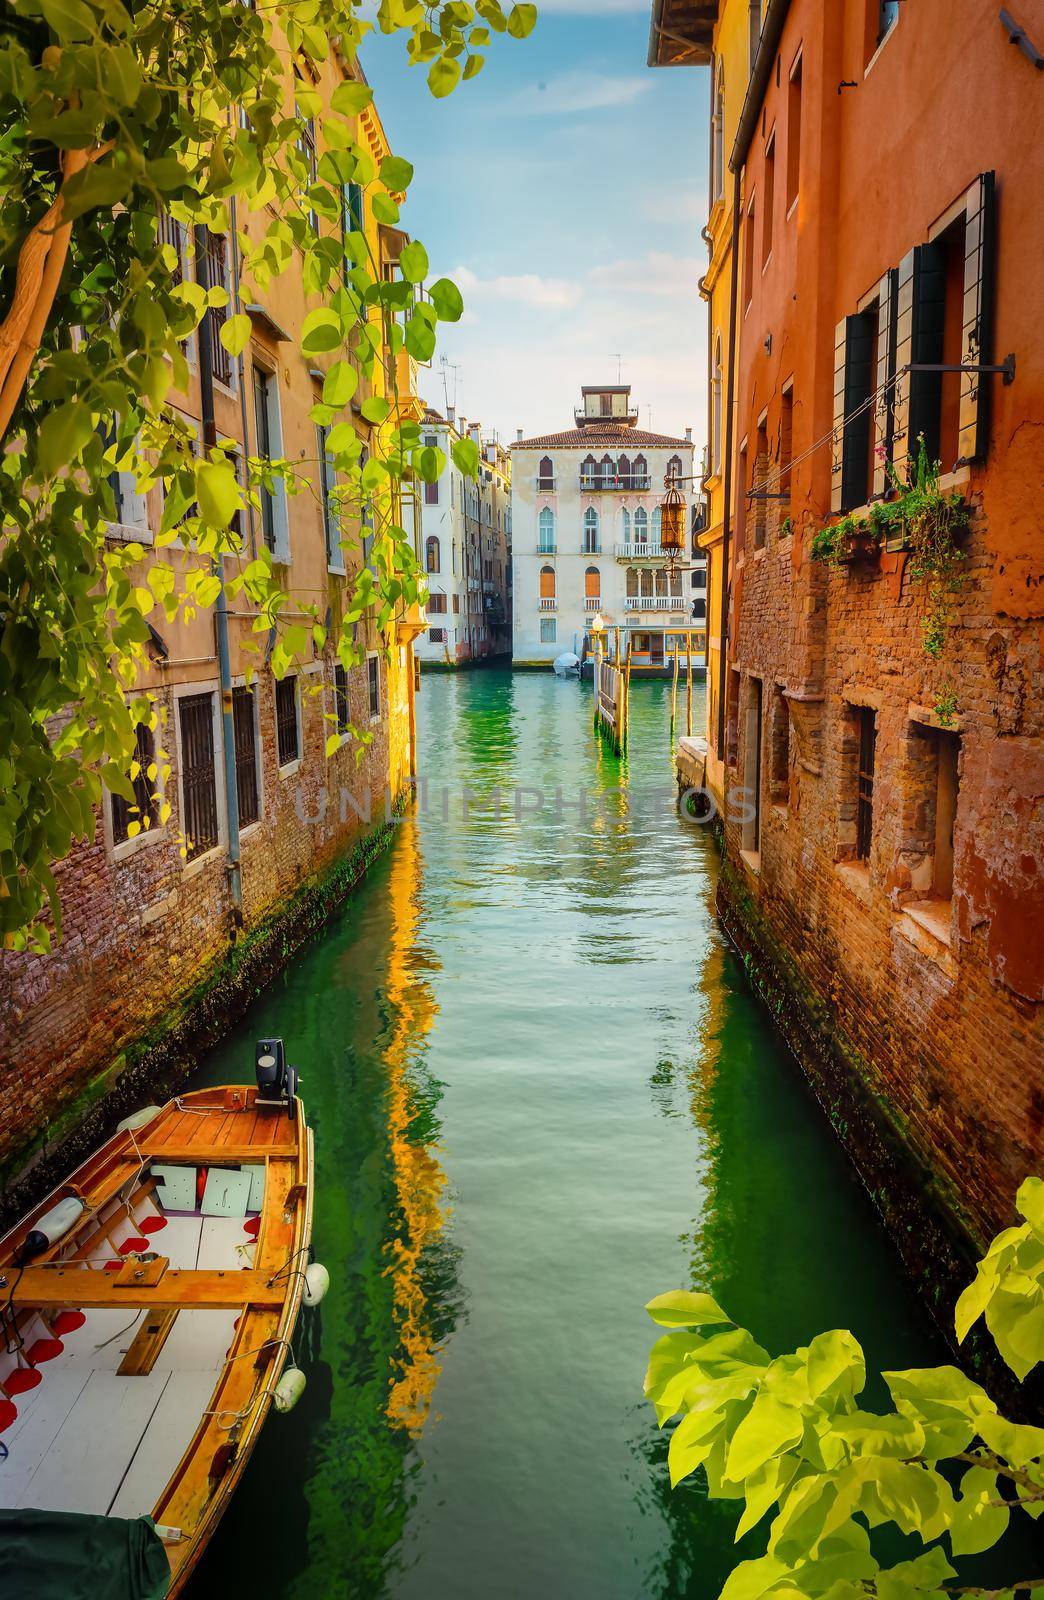 Boat in narrow venetian water canal, Italy